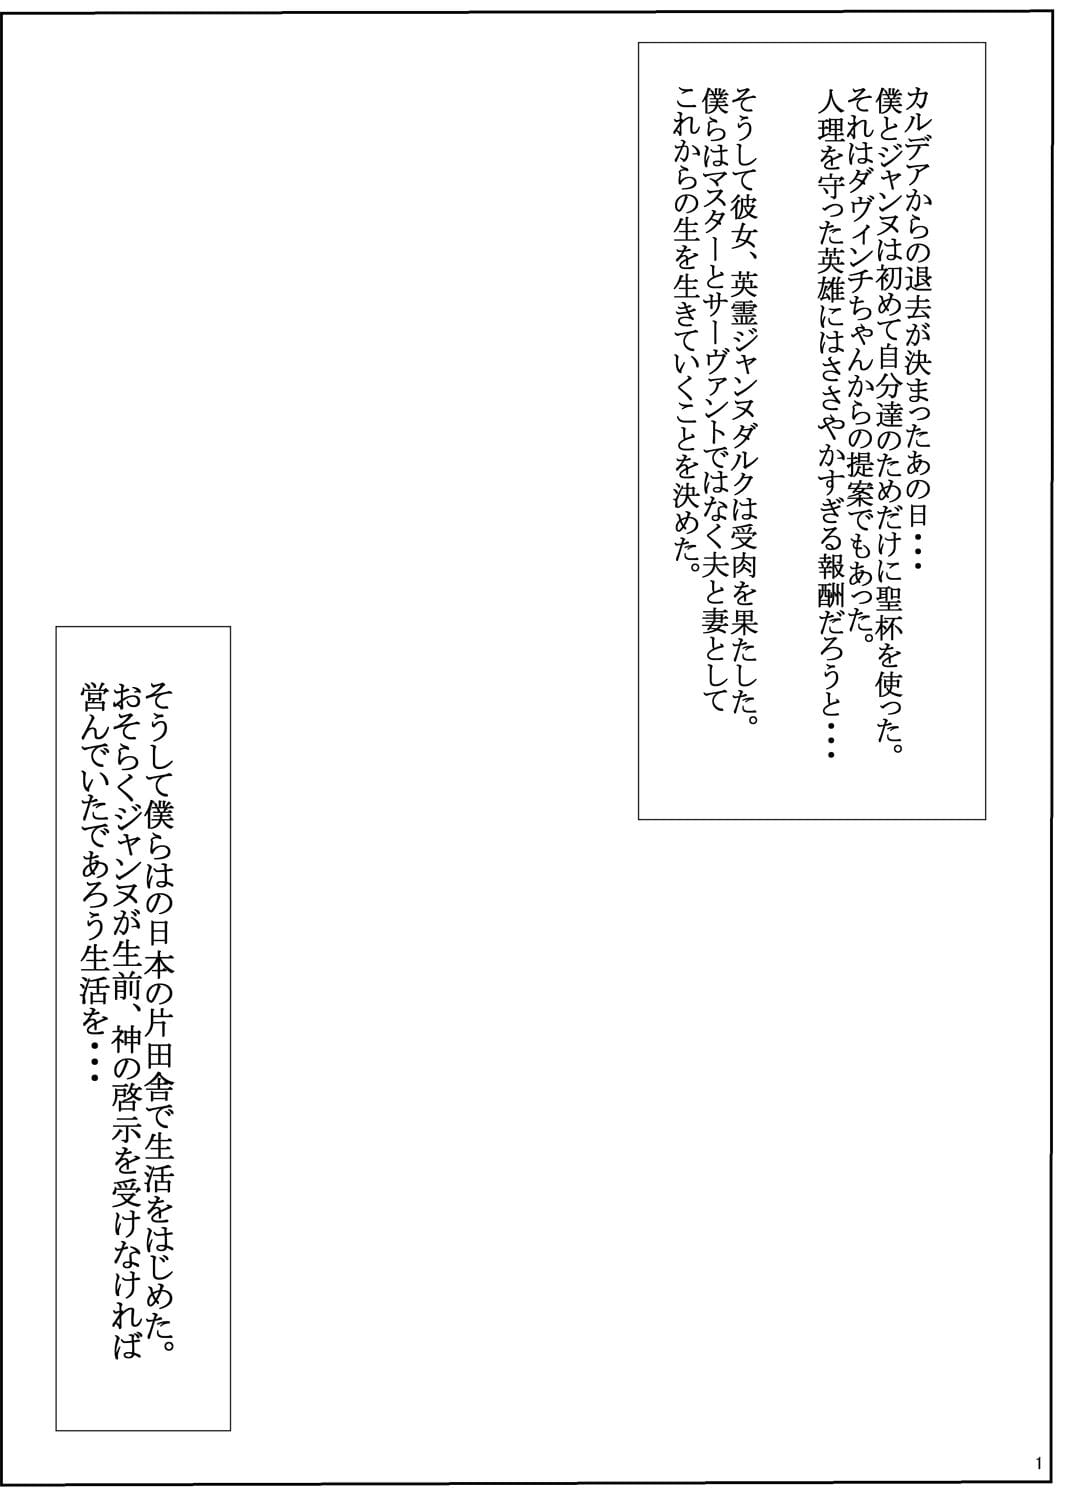 301 goushitsu uchida shou gudao pour jeanne pas de futari Ecchi fate/grand Afin numérique